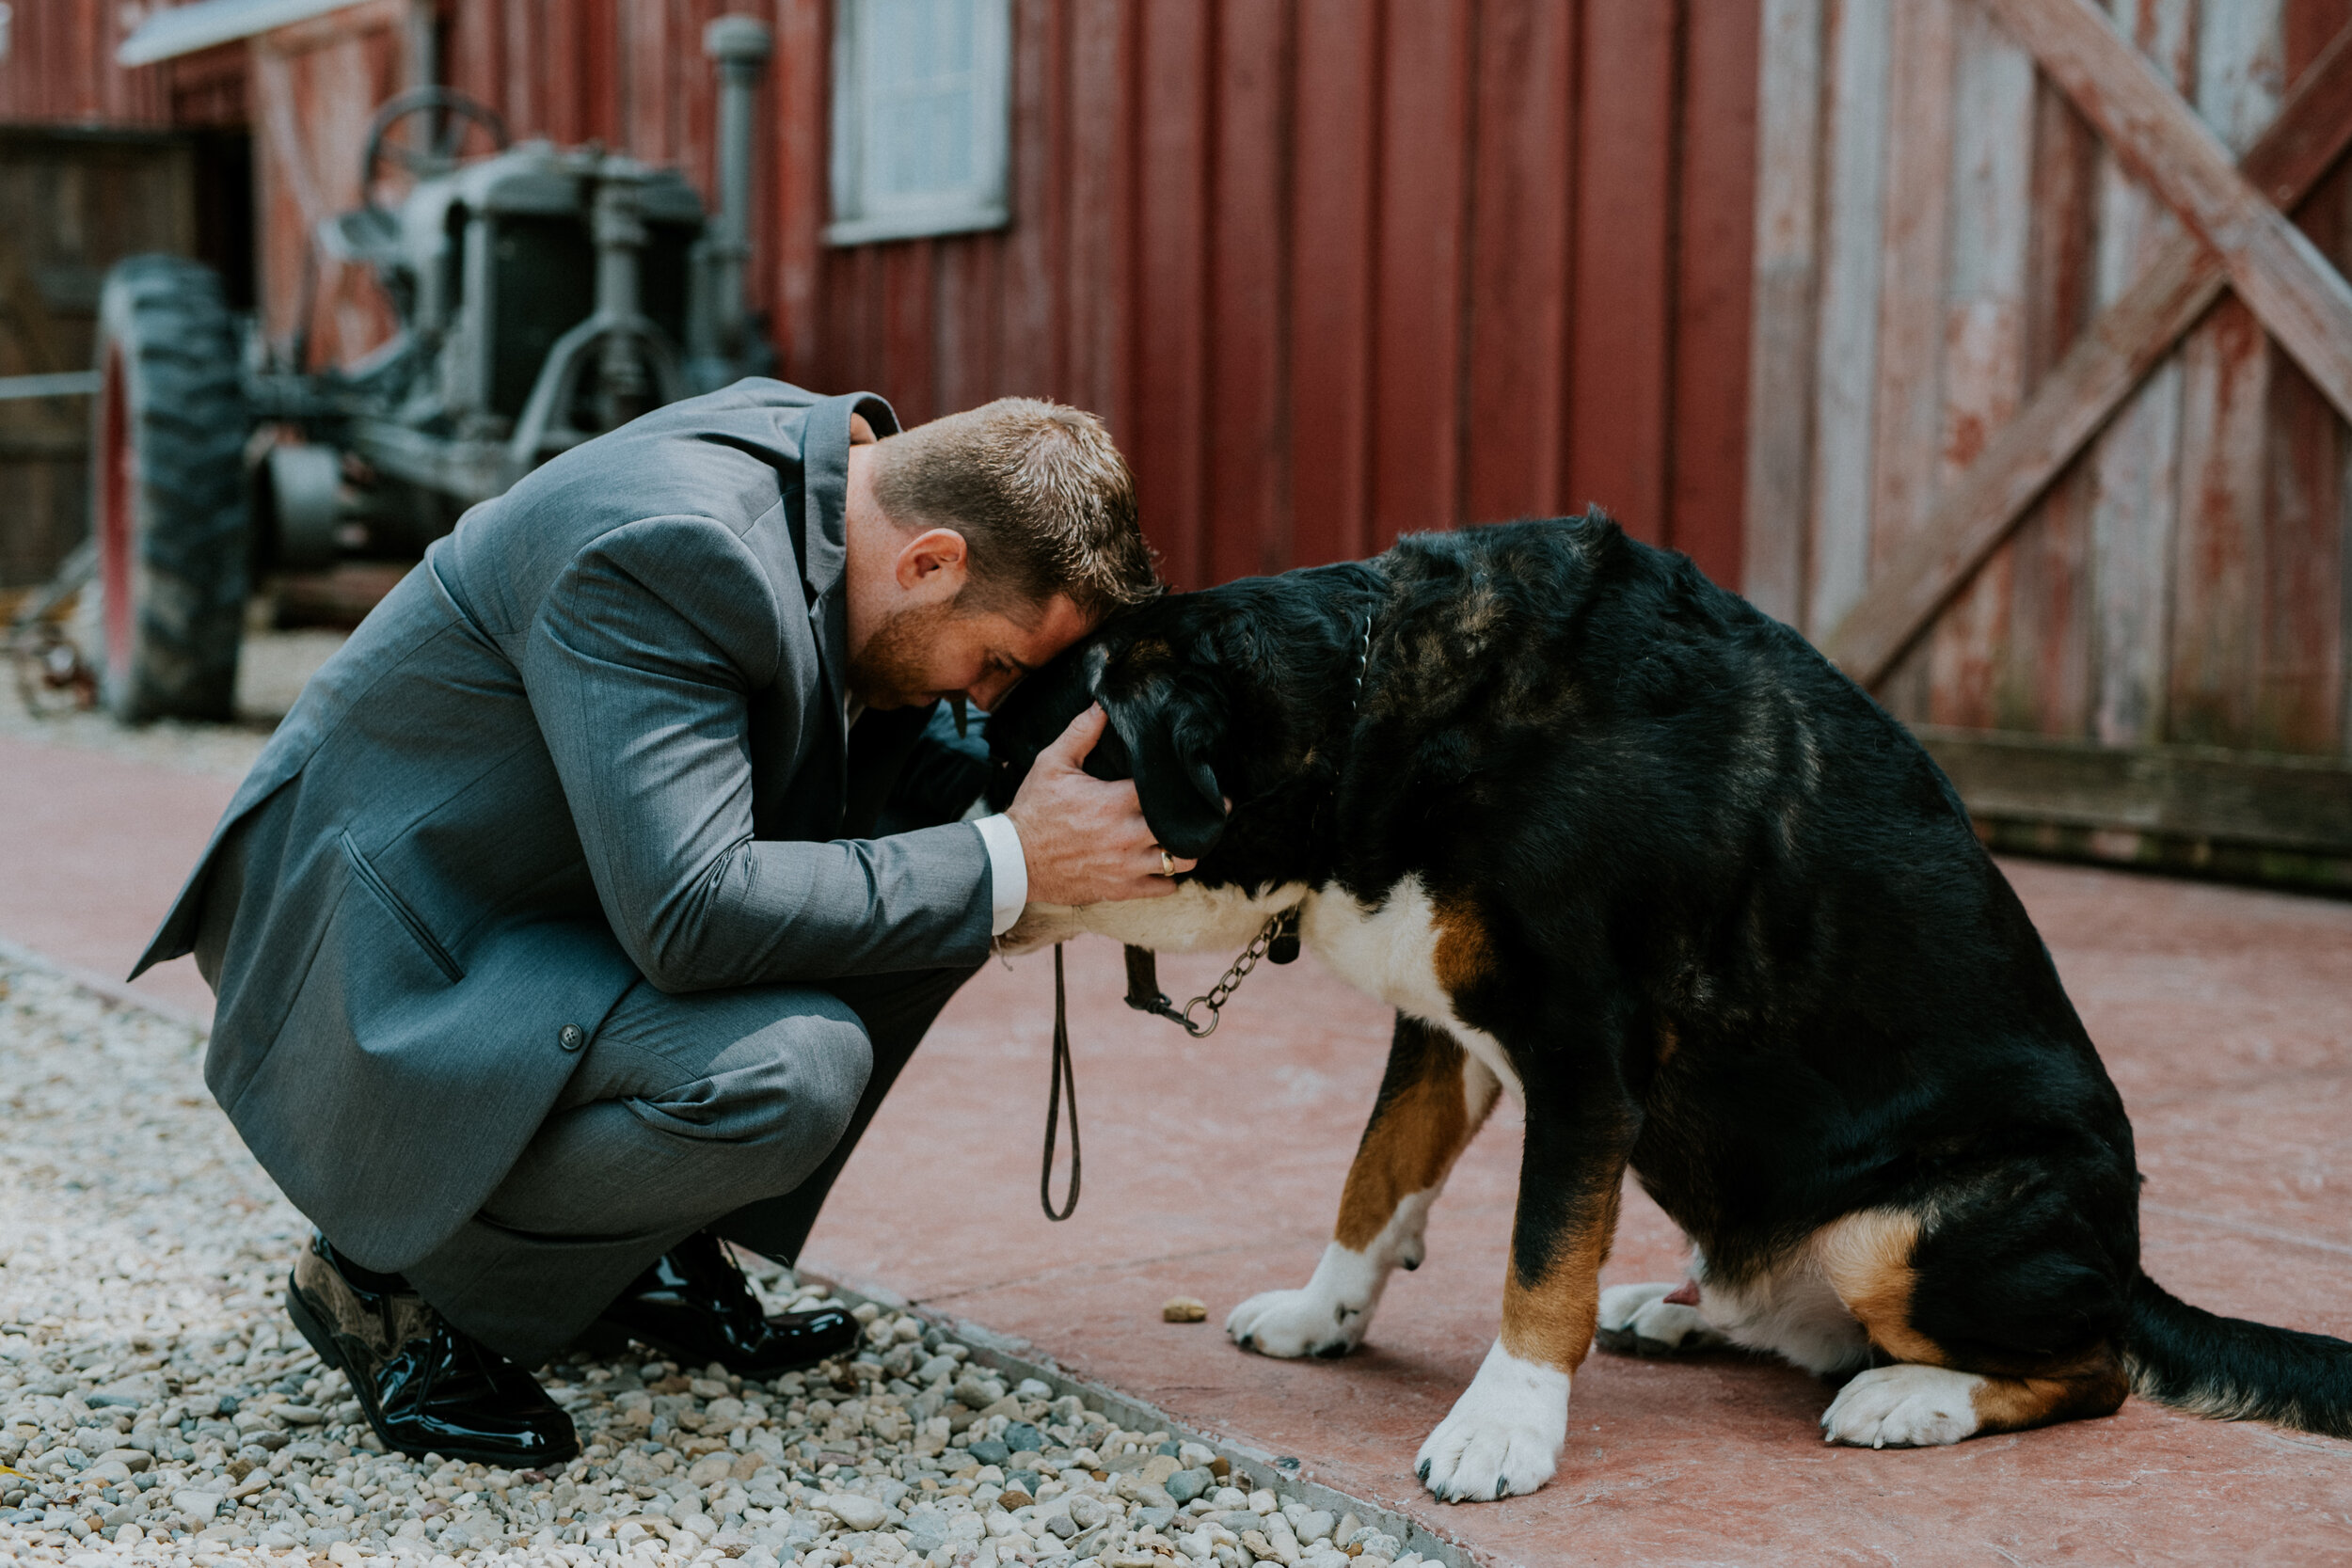 Groom in tuxedo with dog